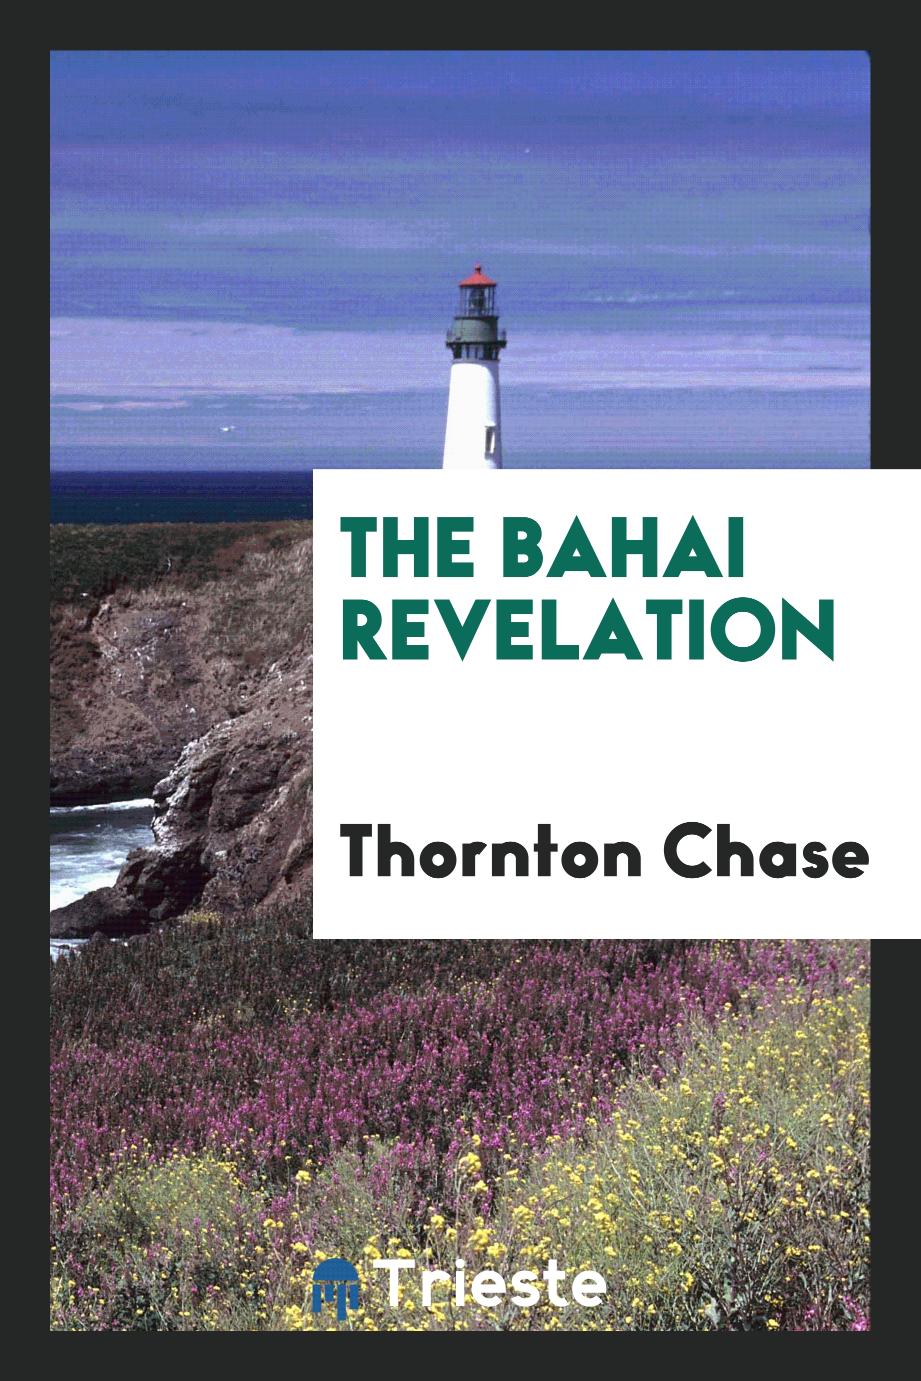 The Bahai revelation